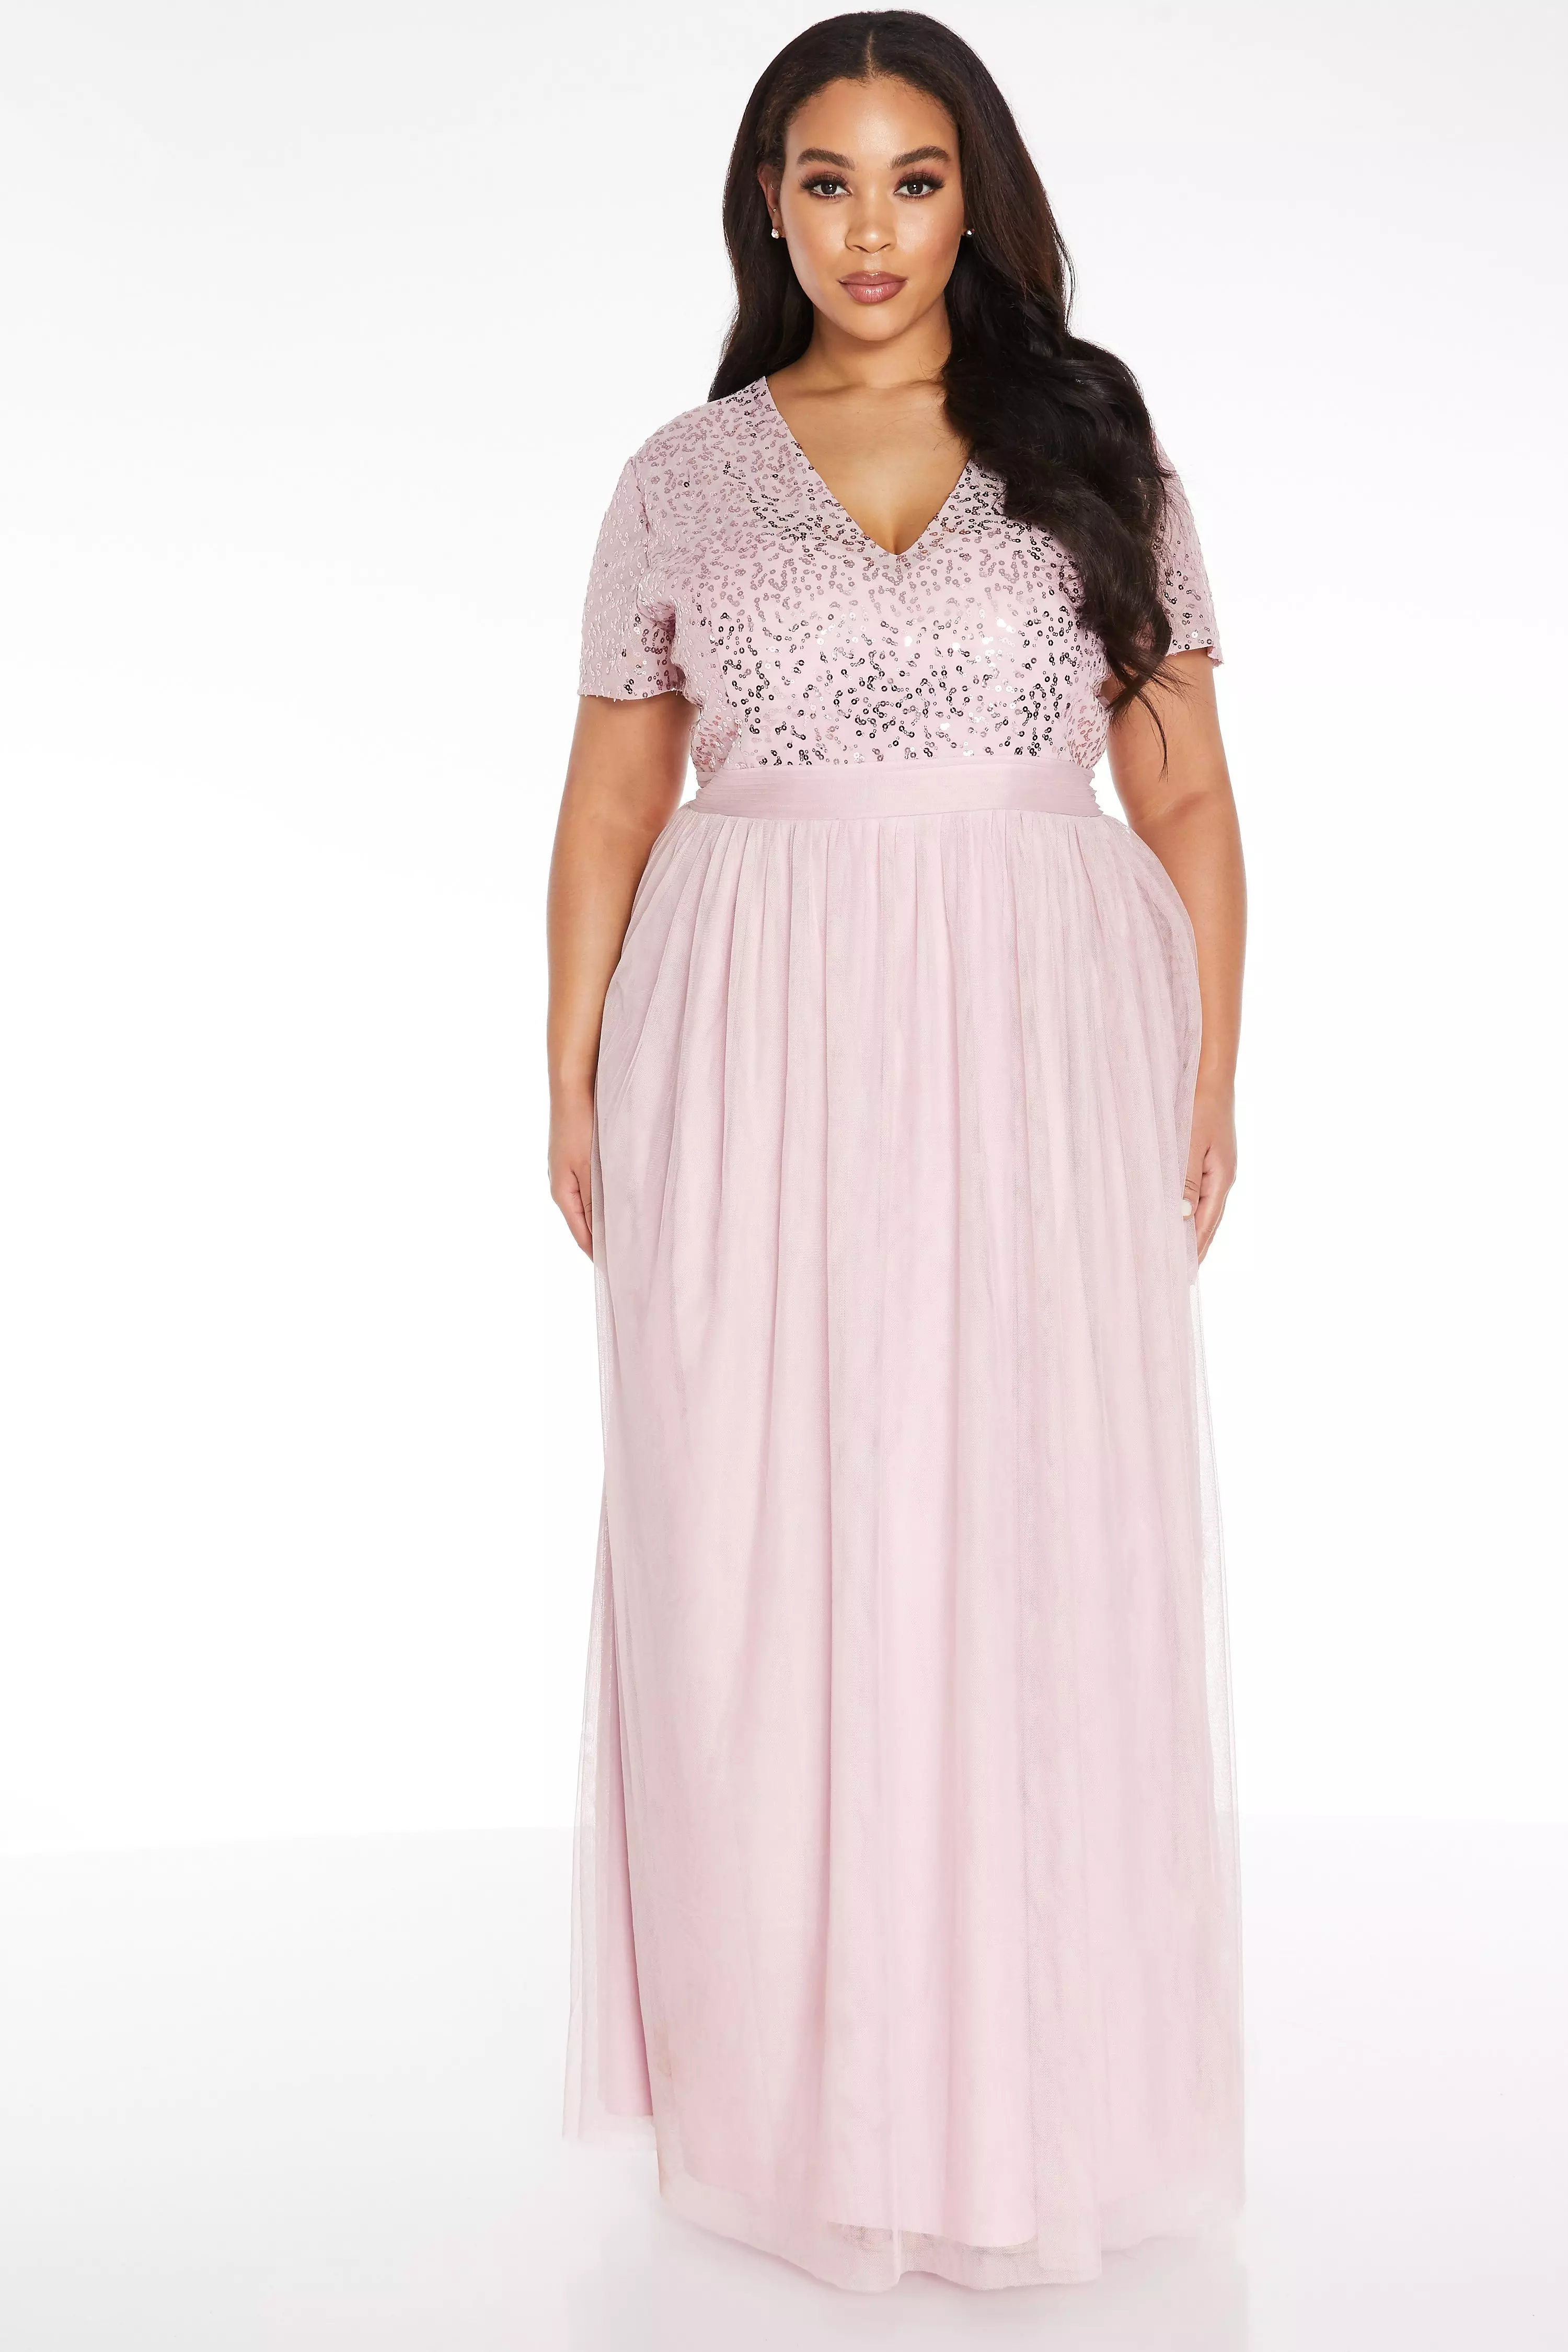 quiz blush pink sequin lace maxi dress